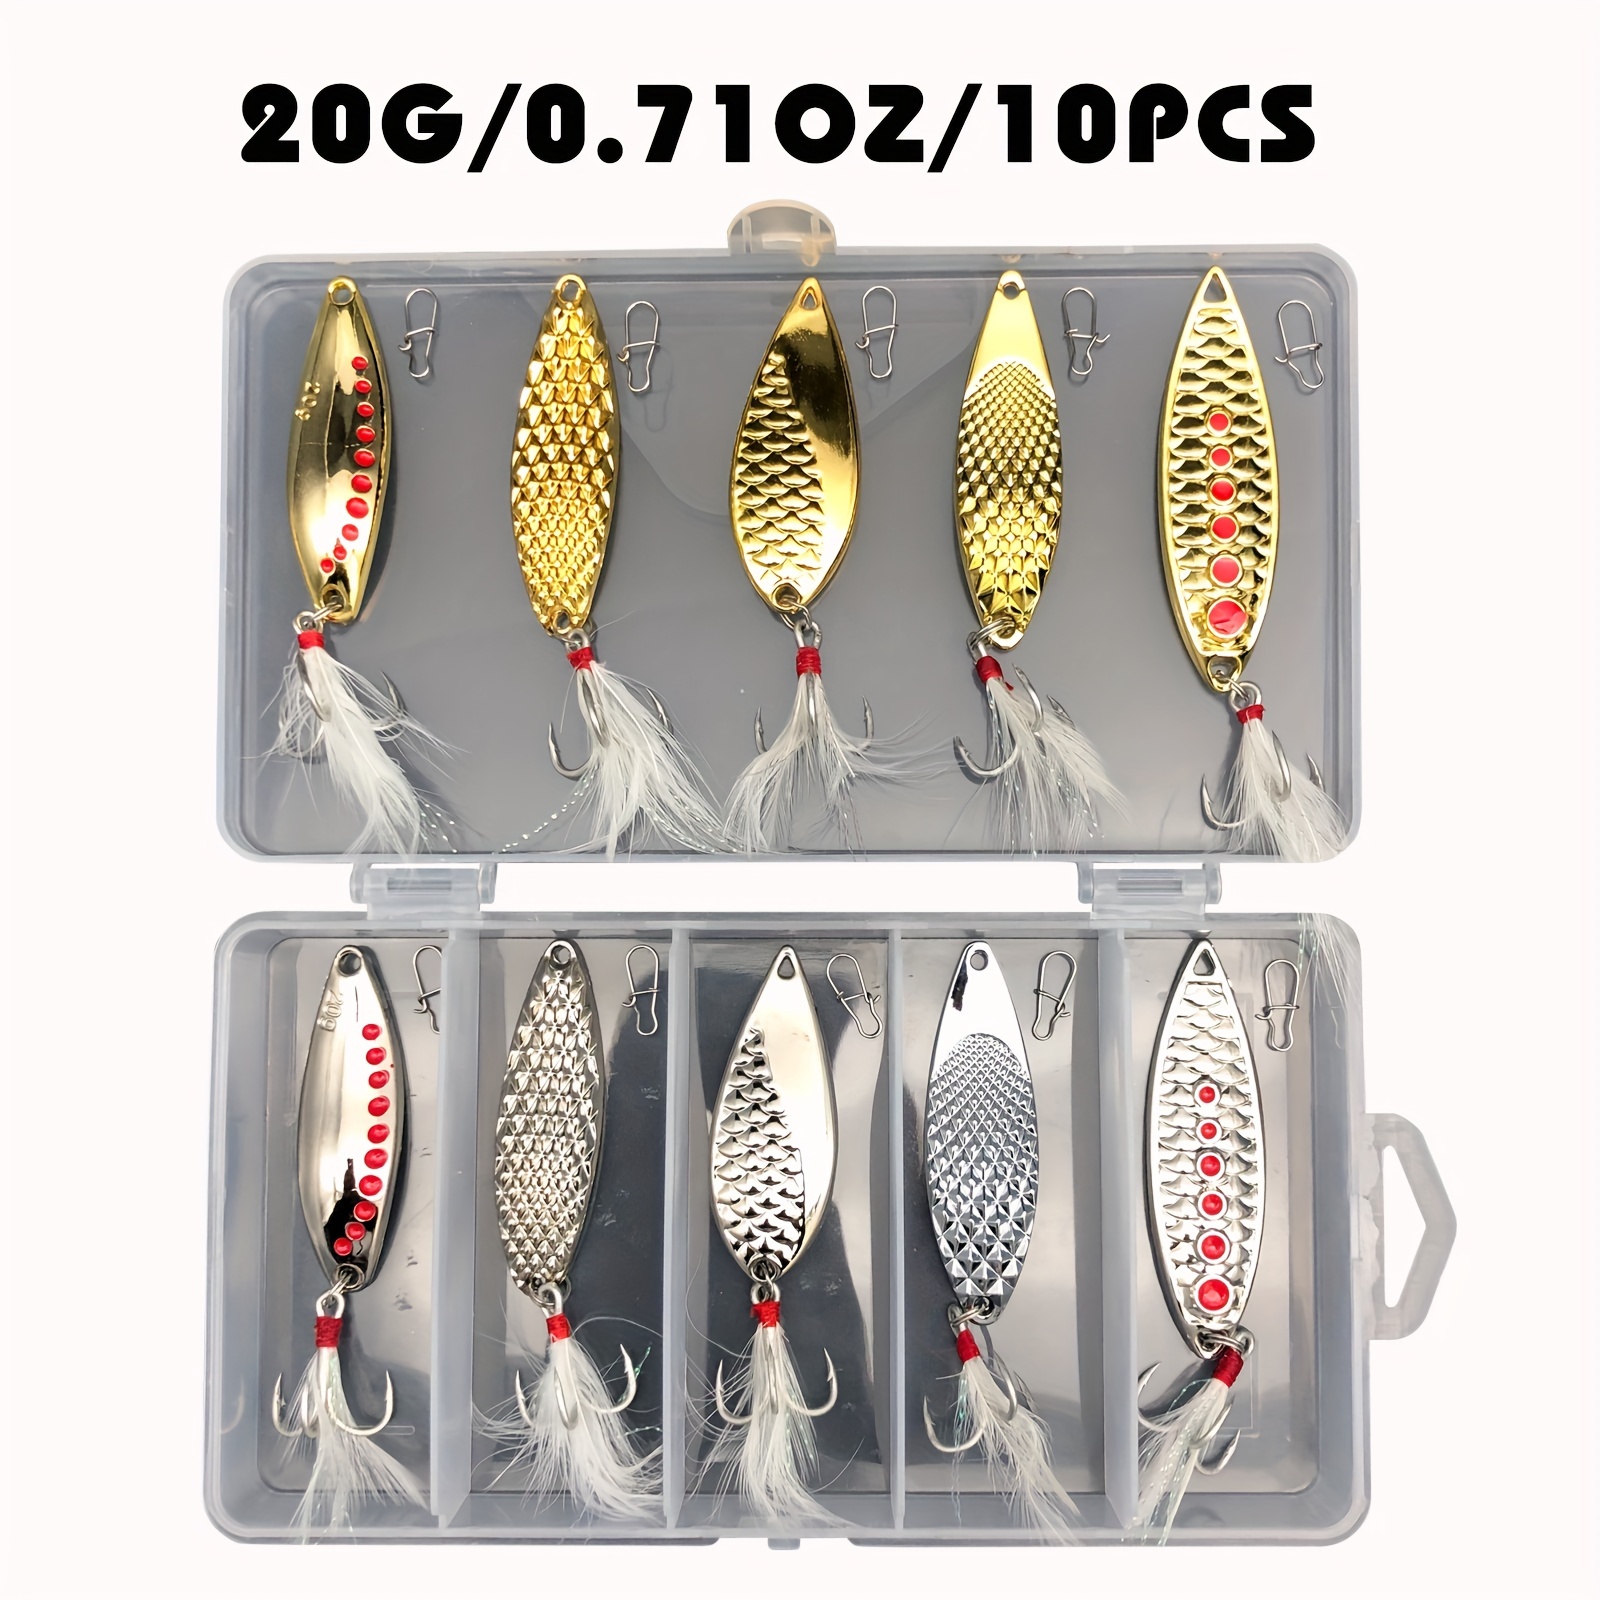 10pcs/box Fishing Lure Set, Minnow, VIB Lure, Long Casting Hard Bait,  Fishing Accessories